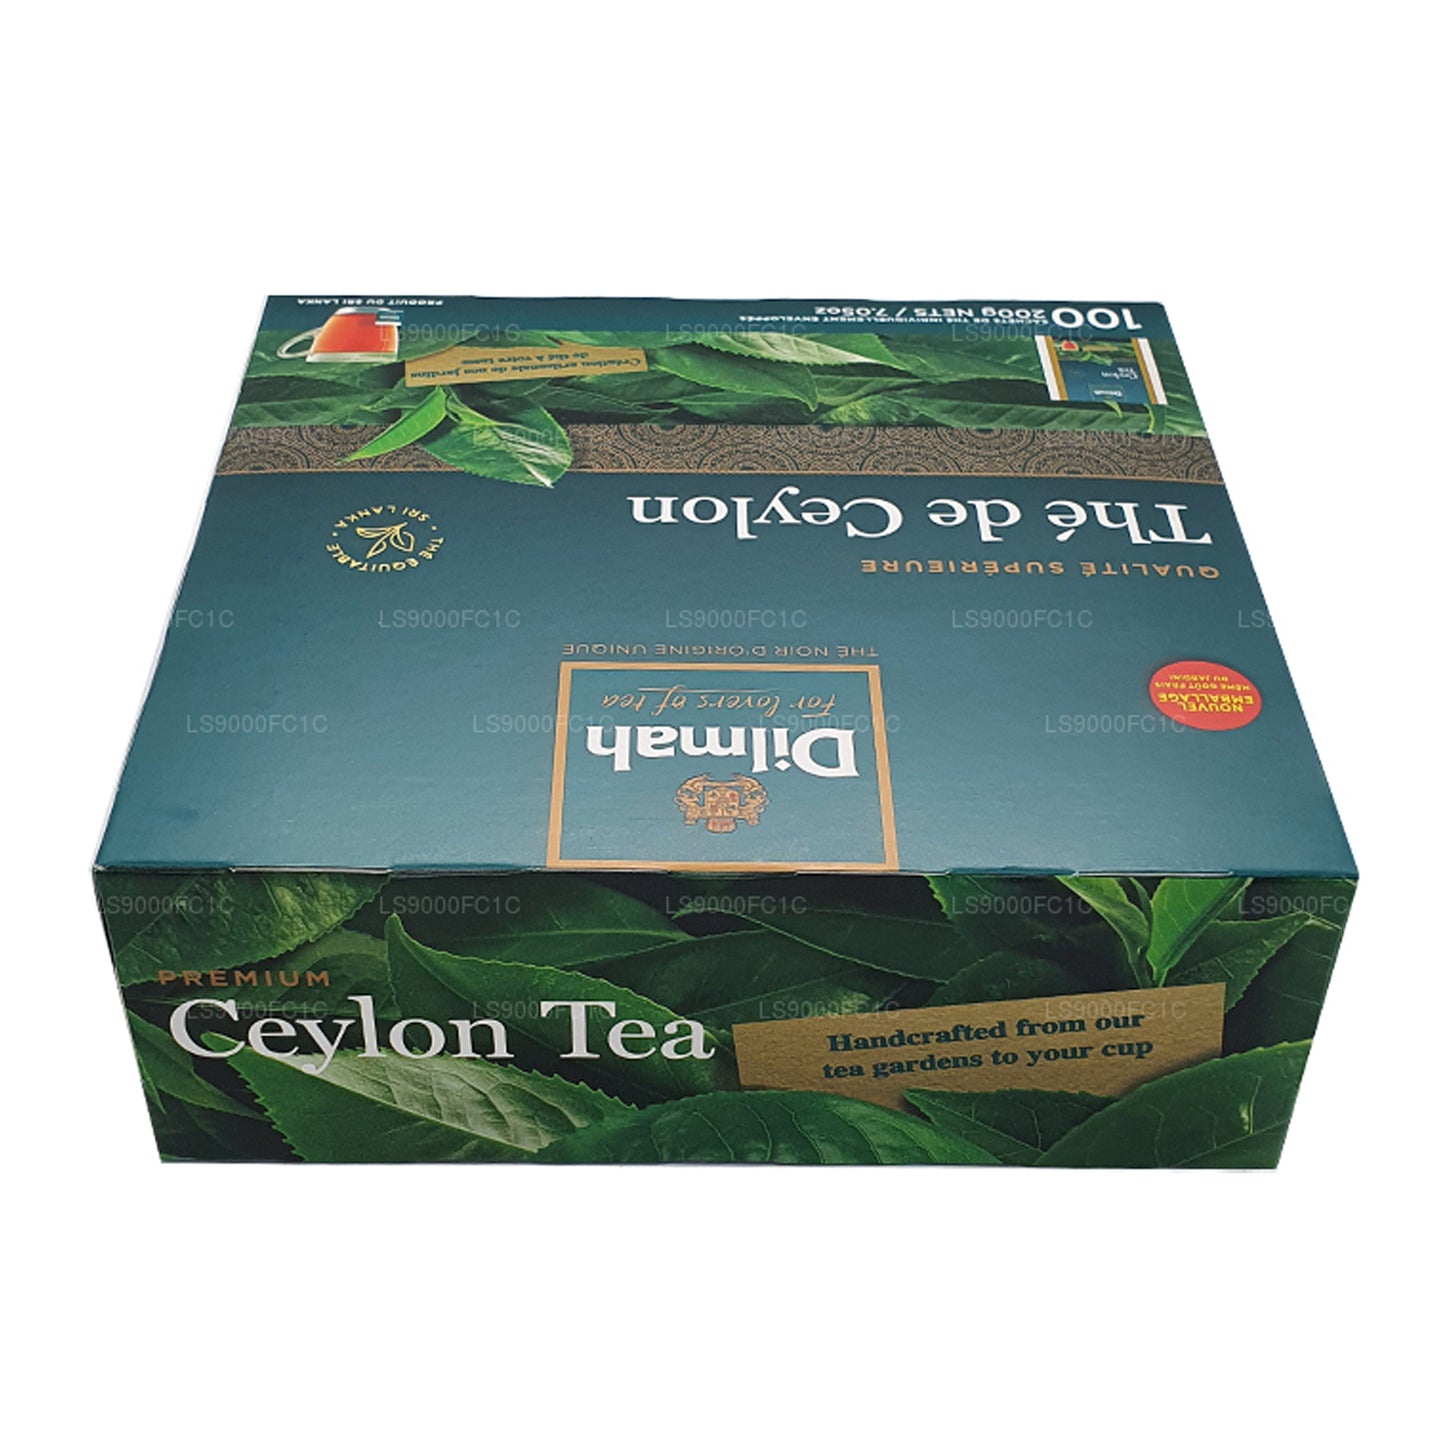 Dilmah Premium 锡兰茶，独立包装 100 个茶包（200 克）